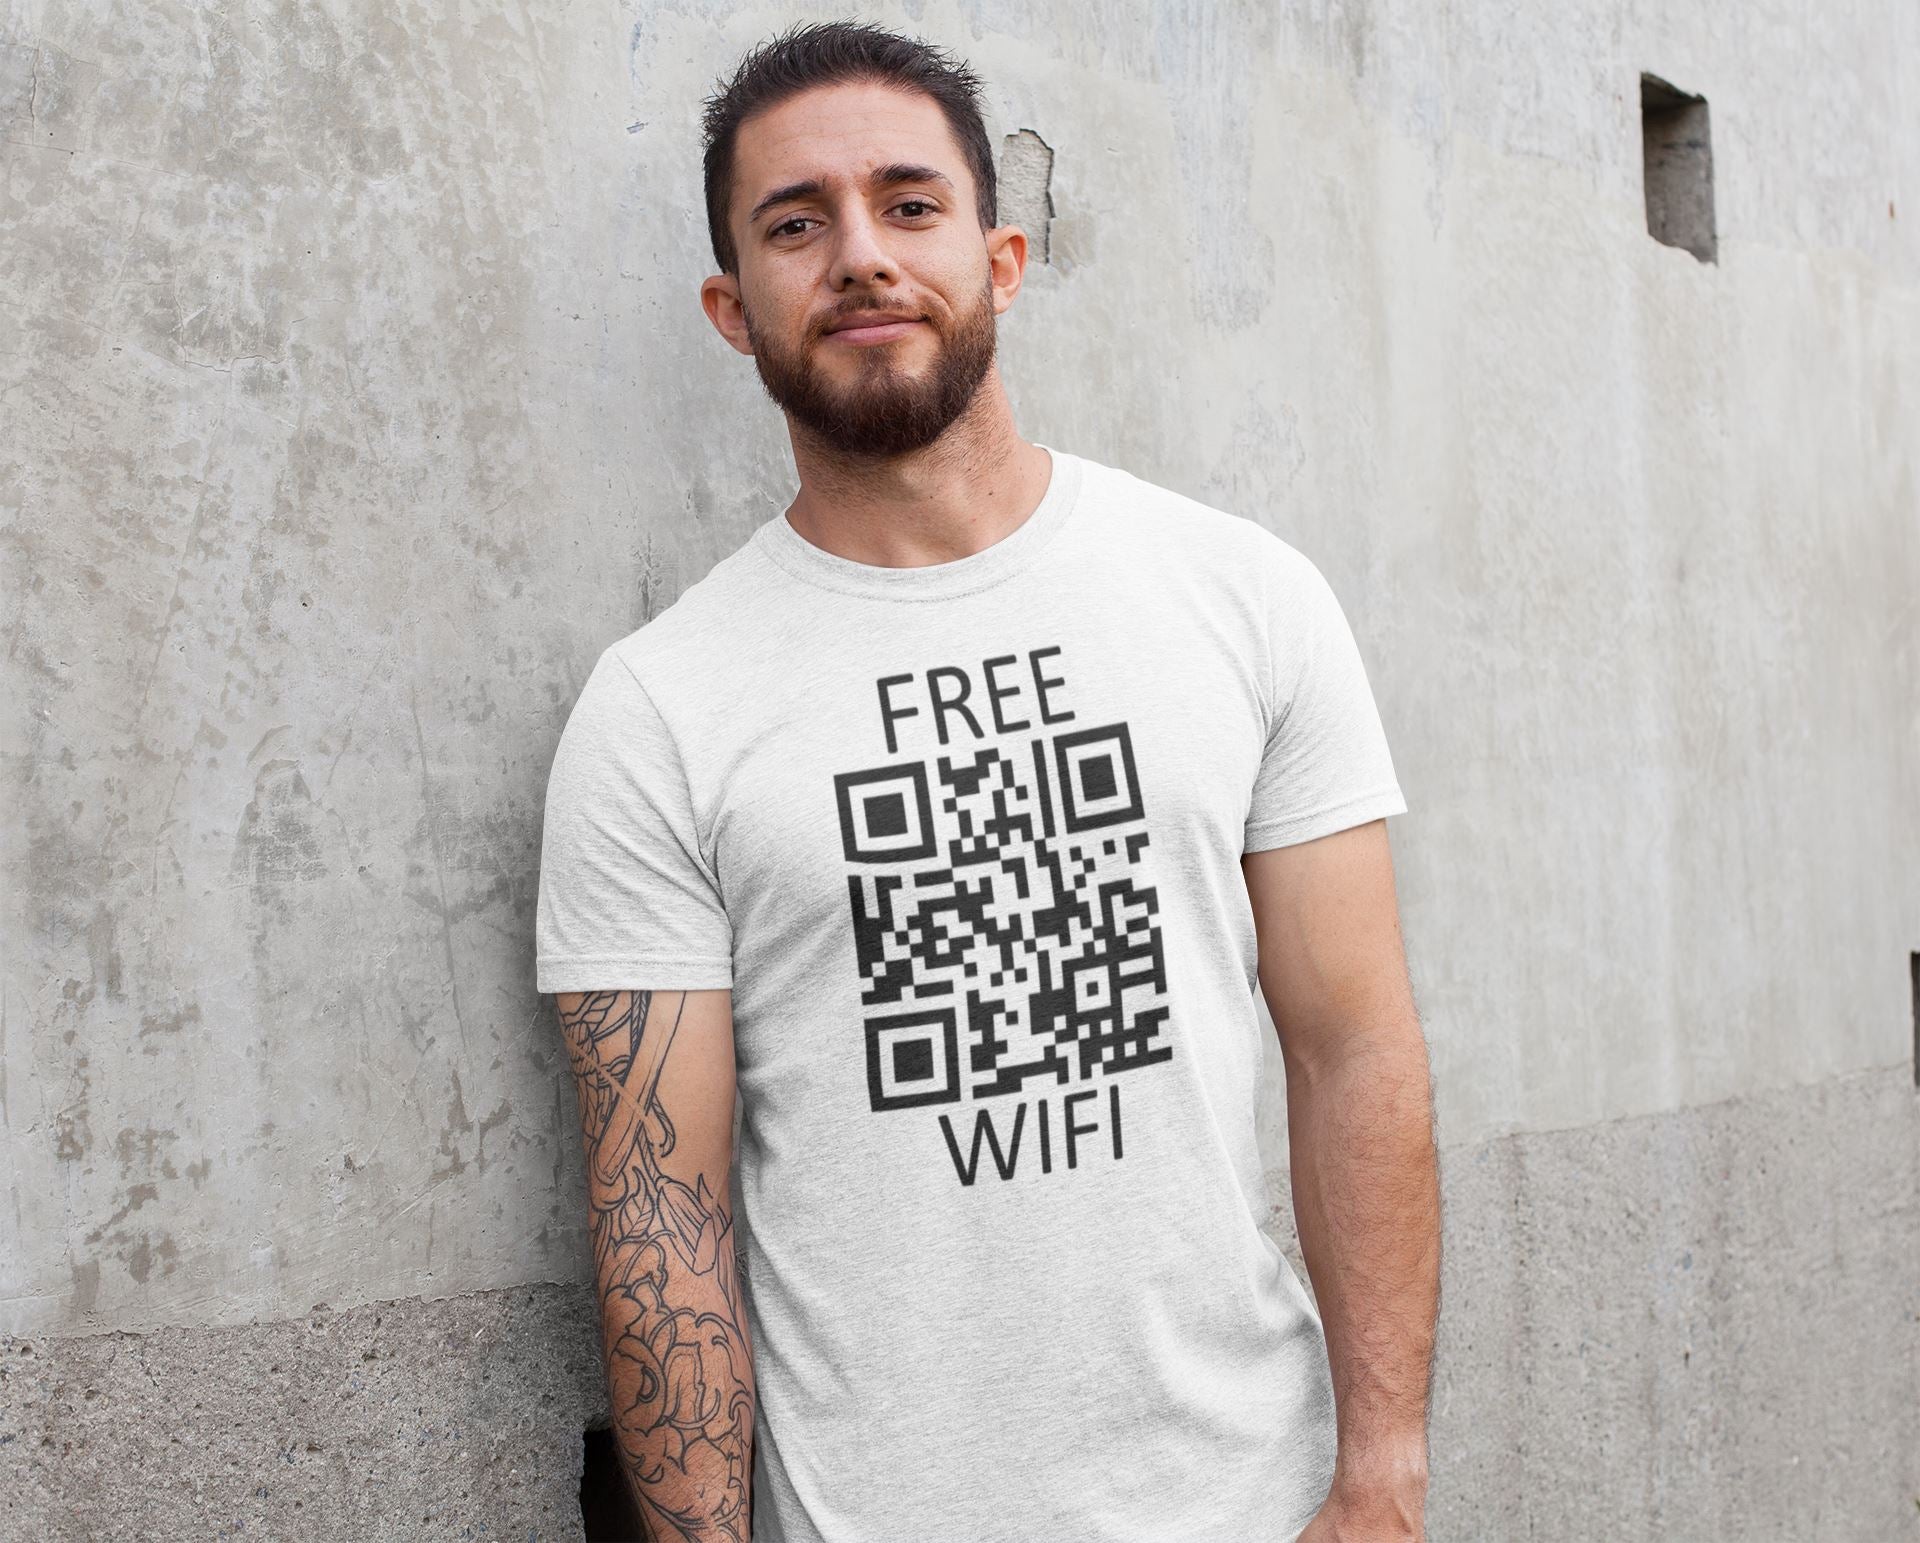 Free Wifi Funny Prank T Shirt for Men and Women freeshipping - Catch My Drift India